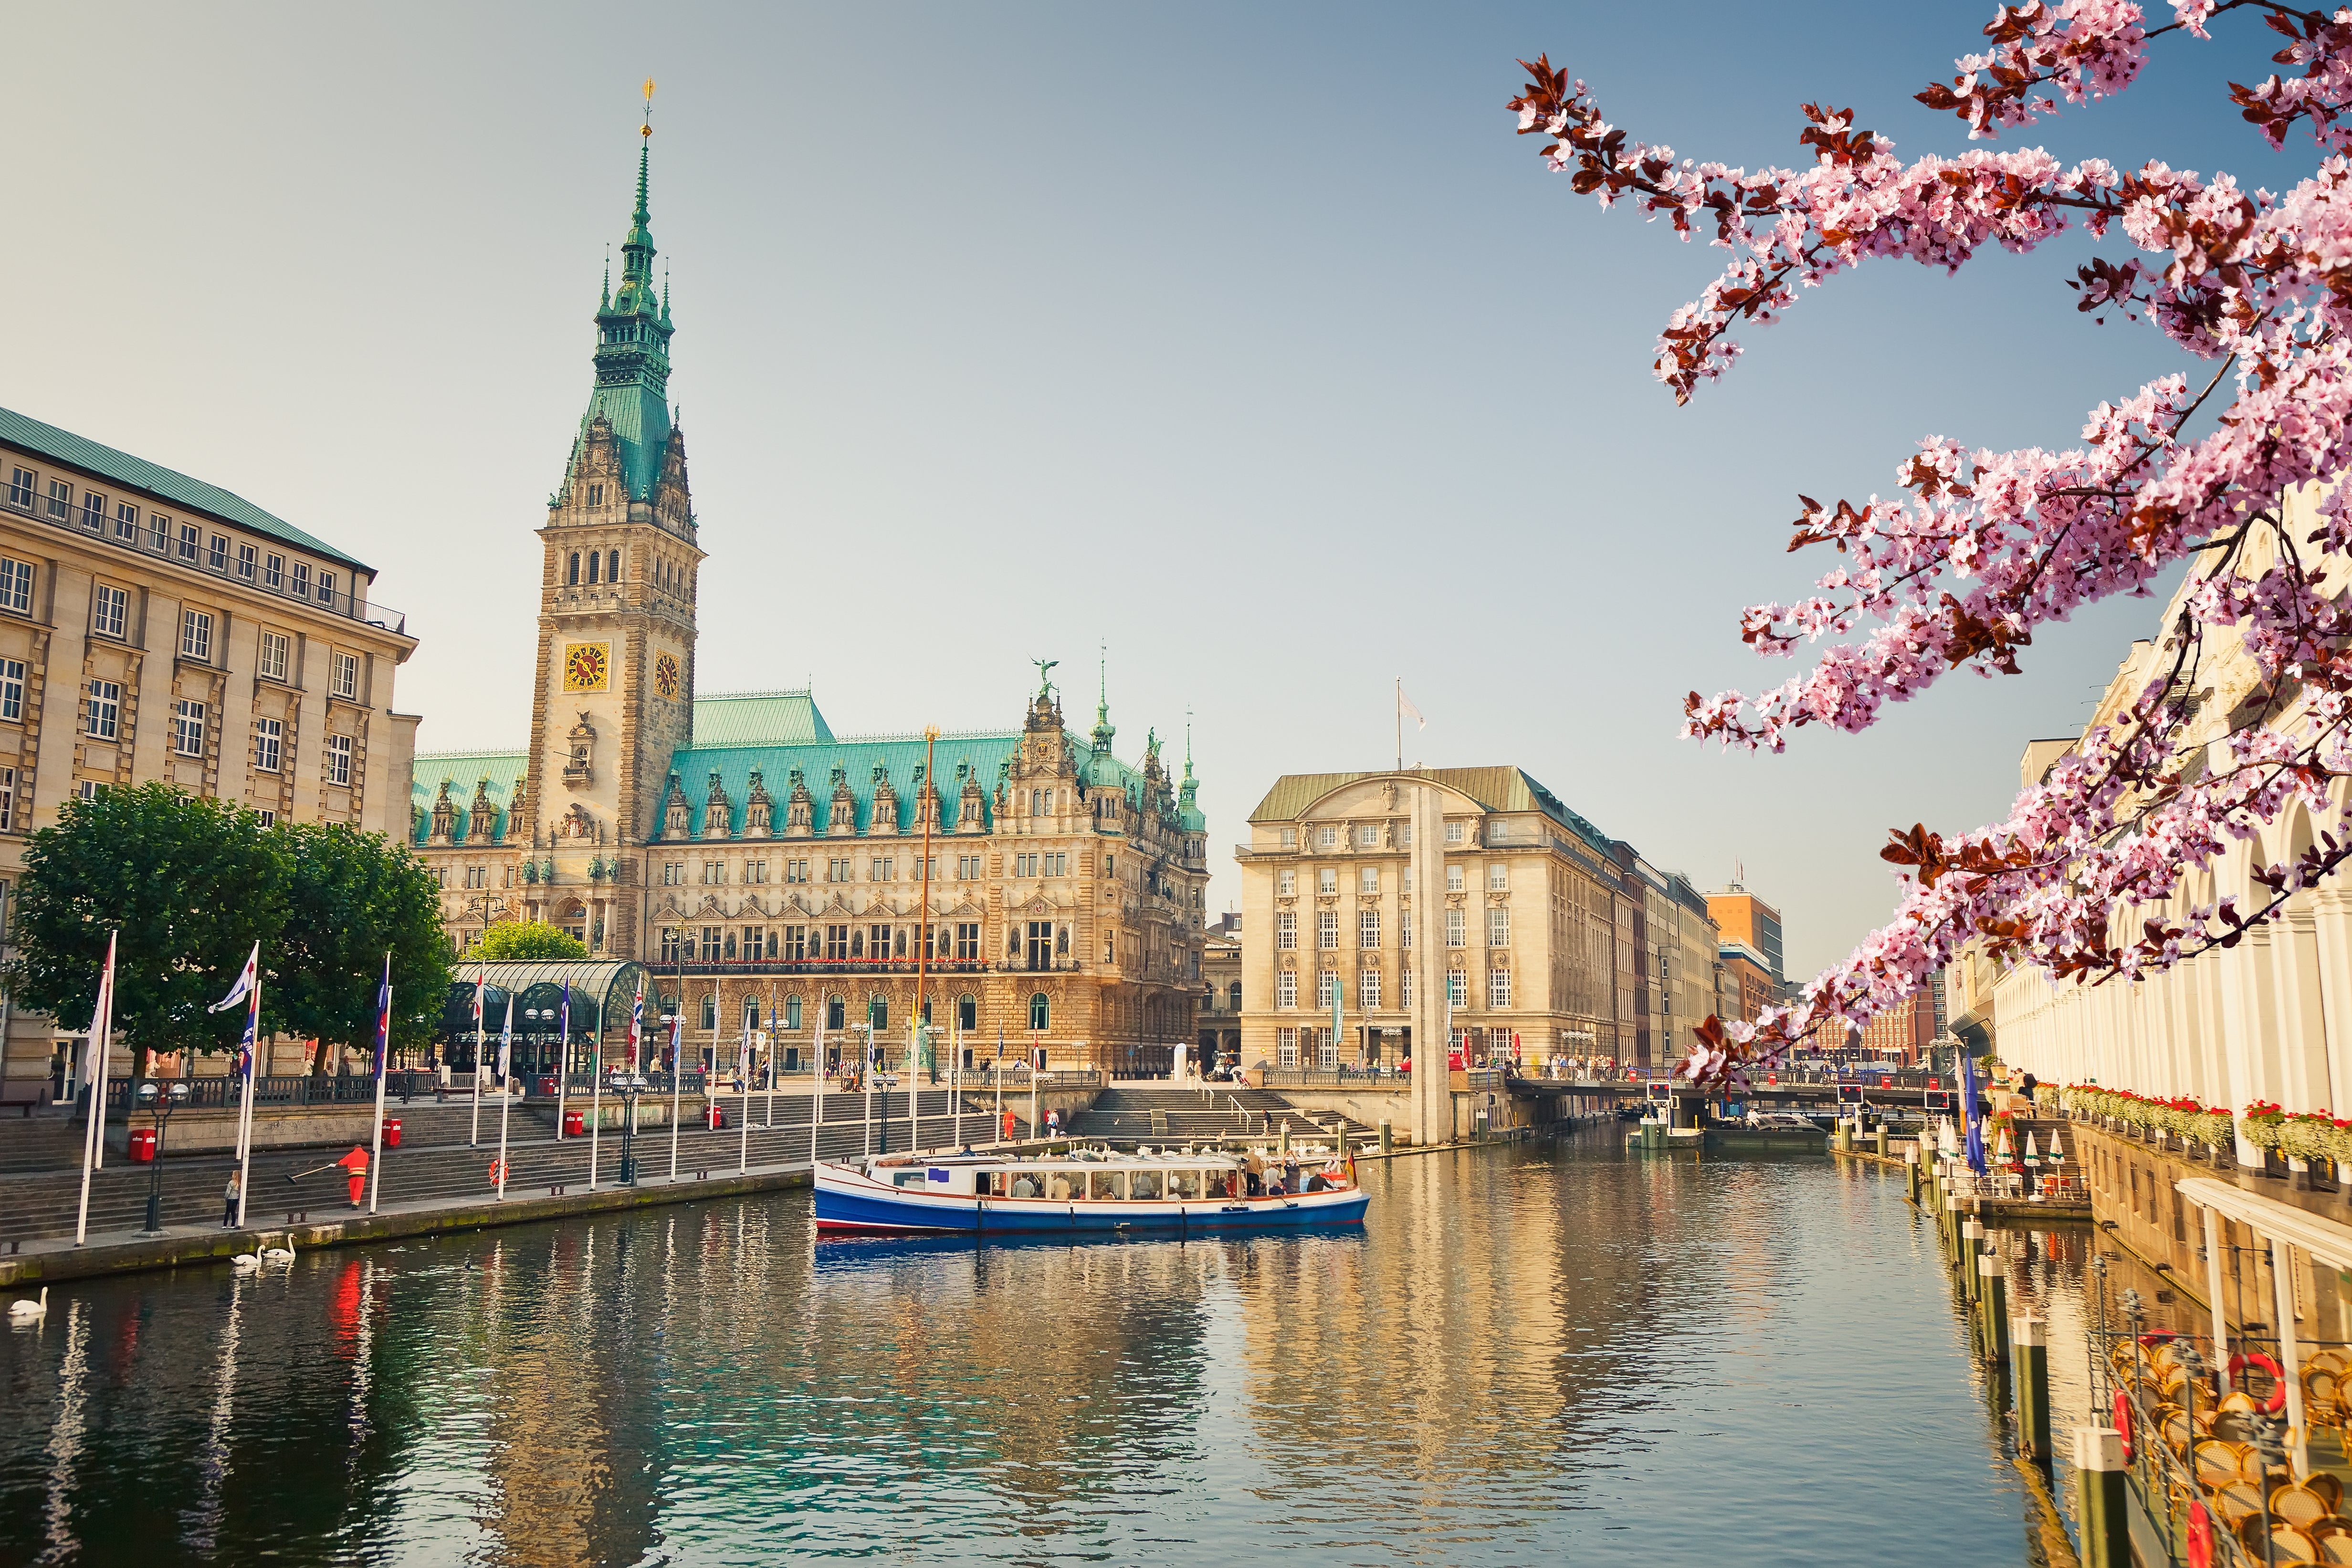 Hamburg is a Unesco hotspot